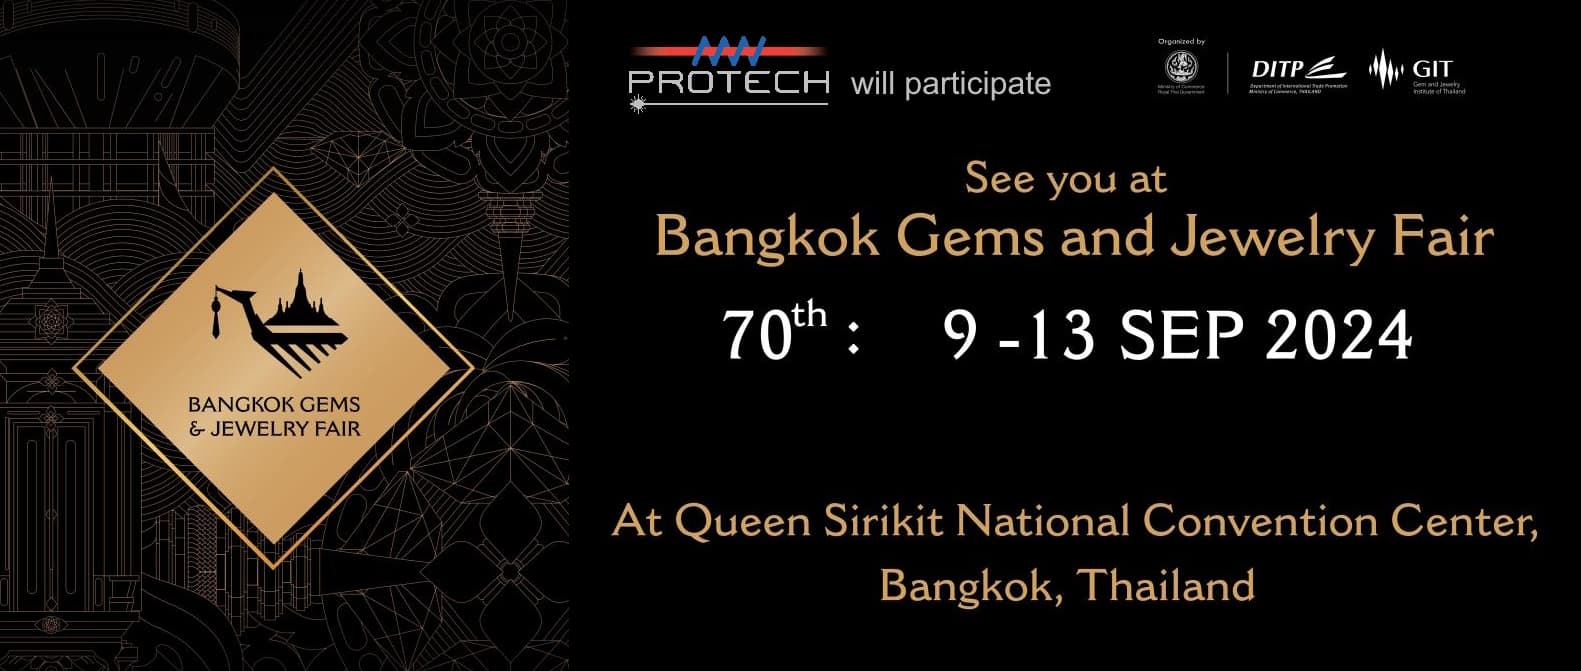 Bangkok Gems & Jewelry Fair 2024